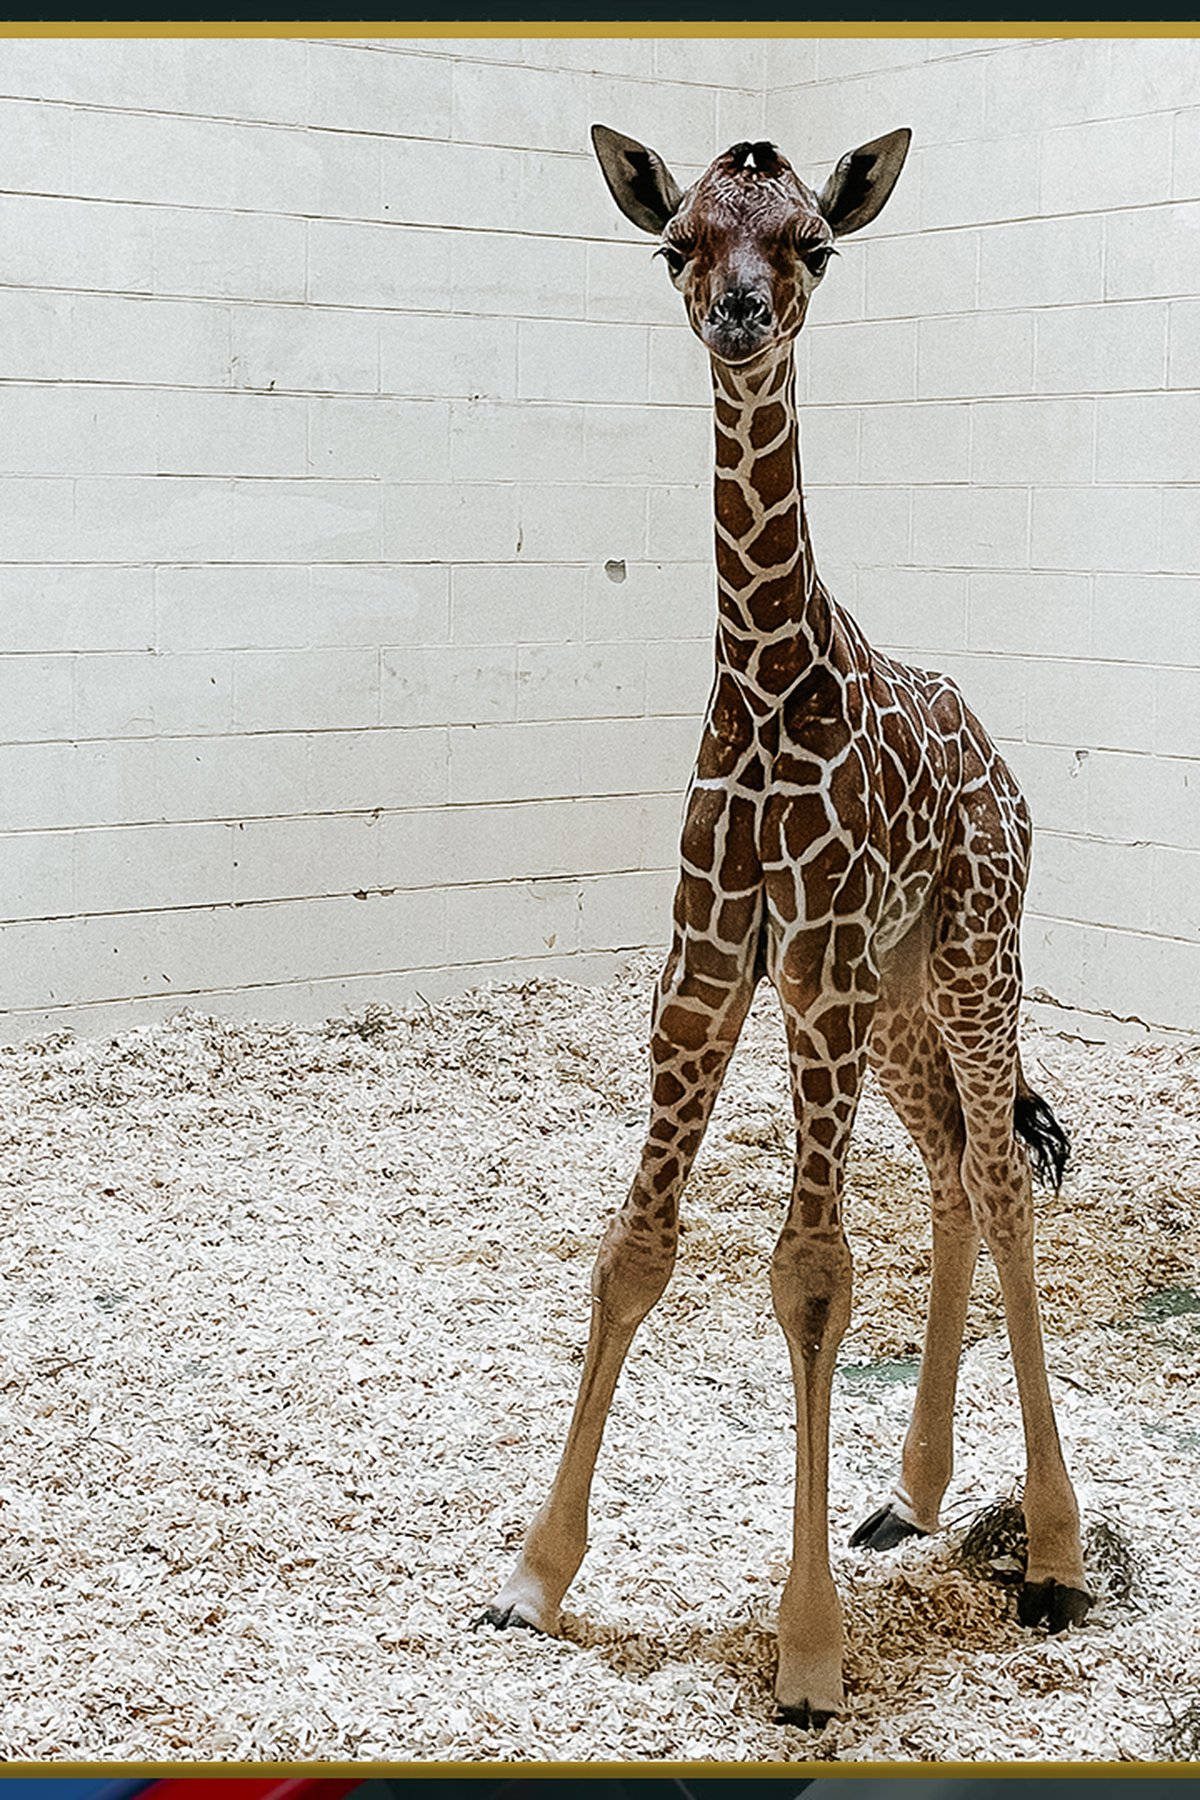 Baby Giraffe With Long Legs